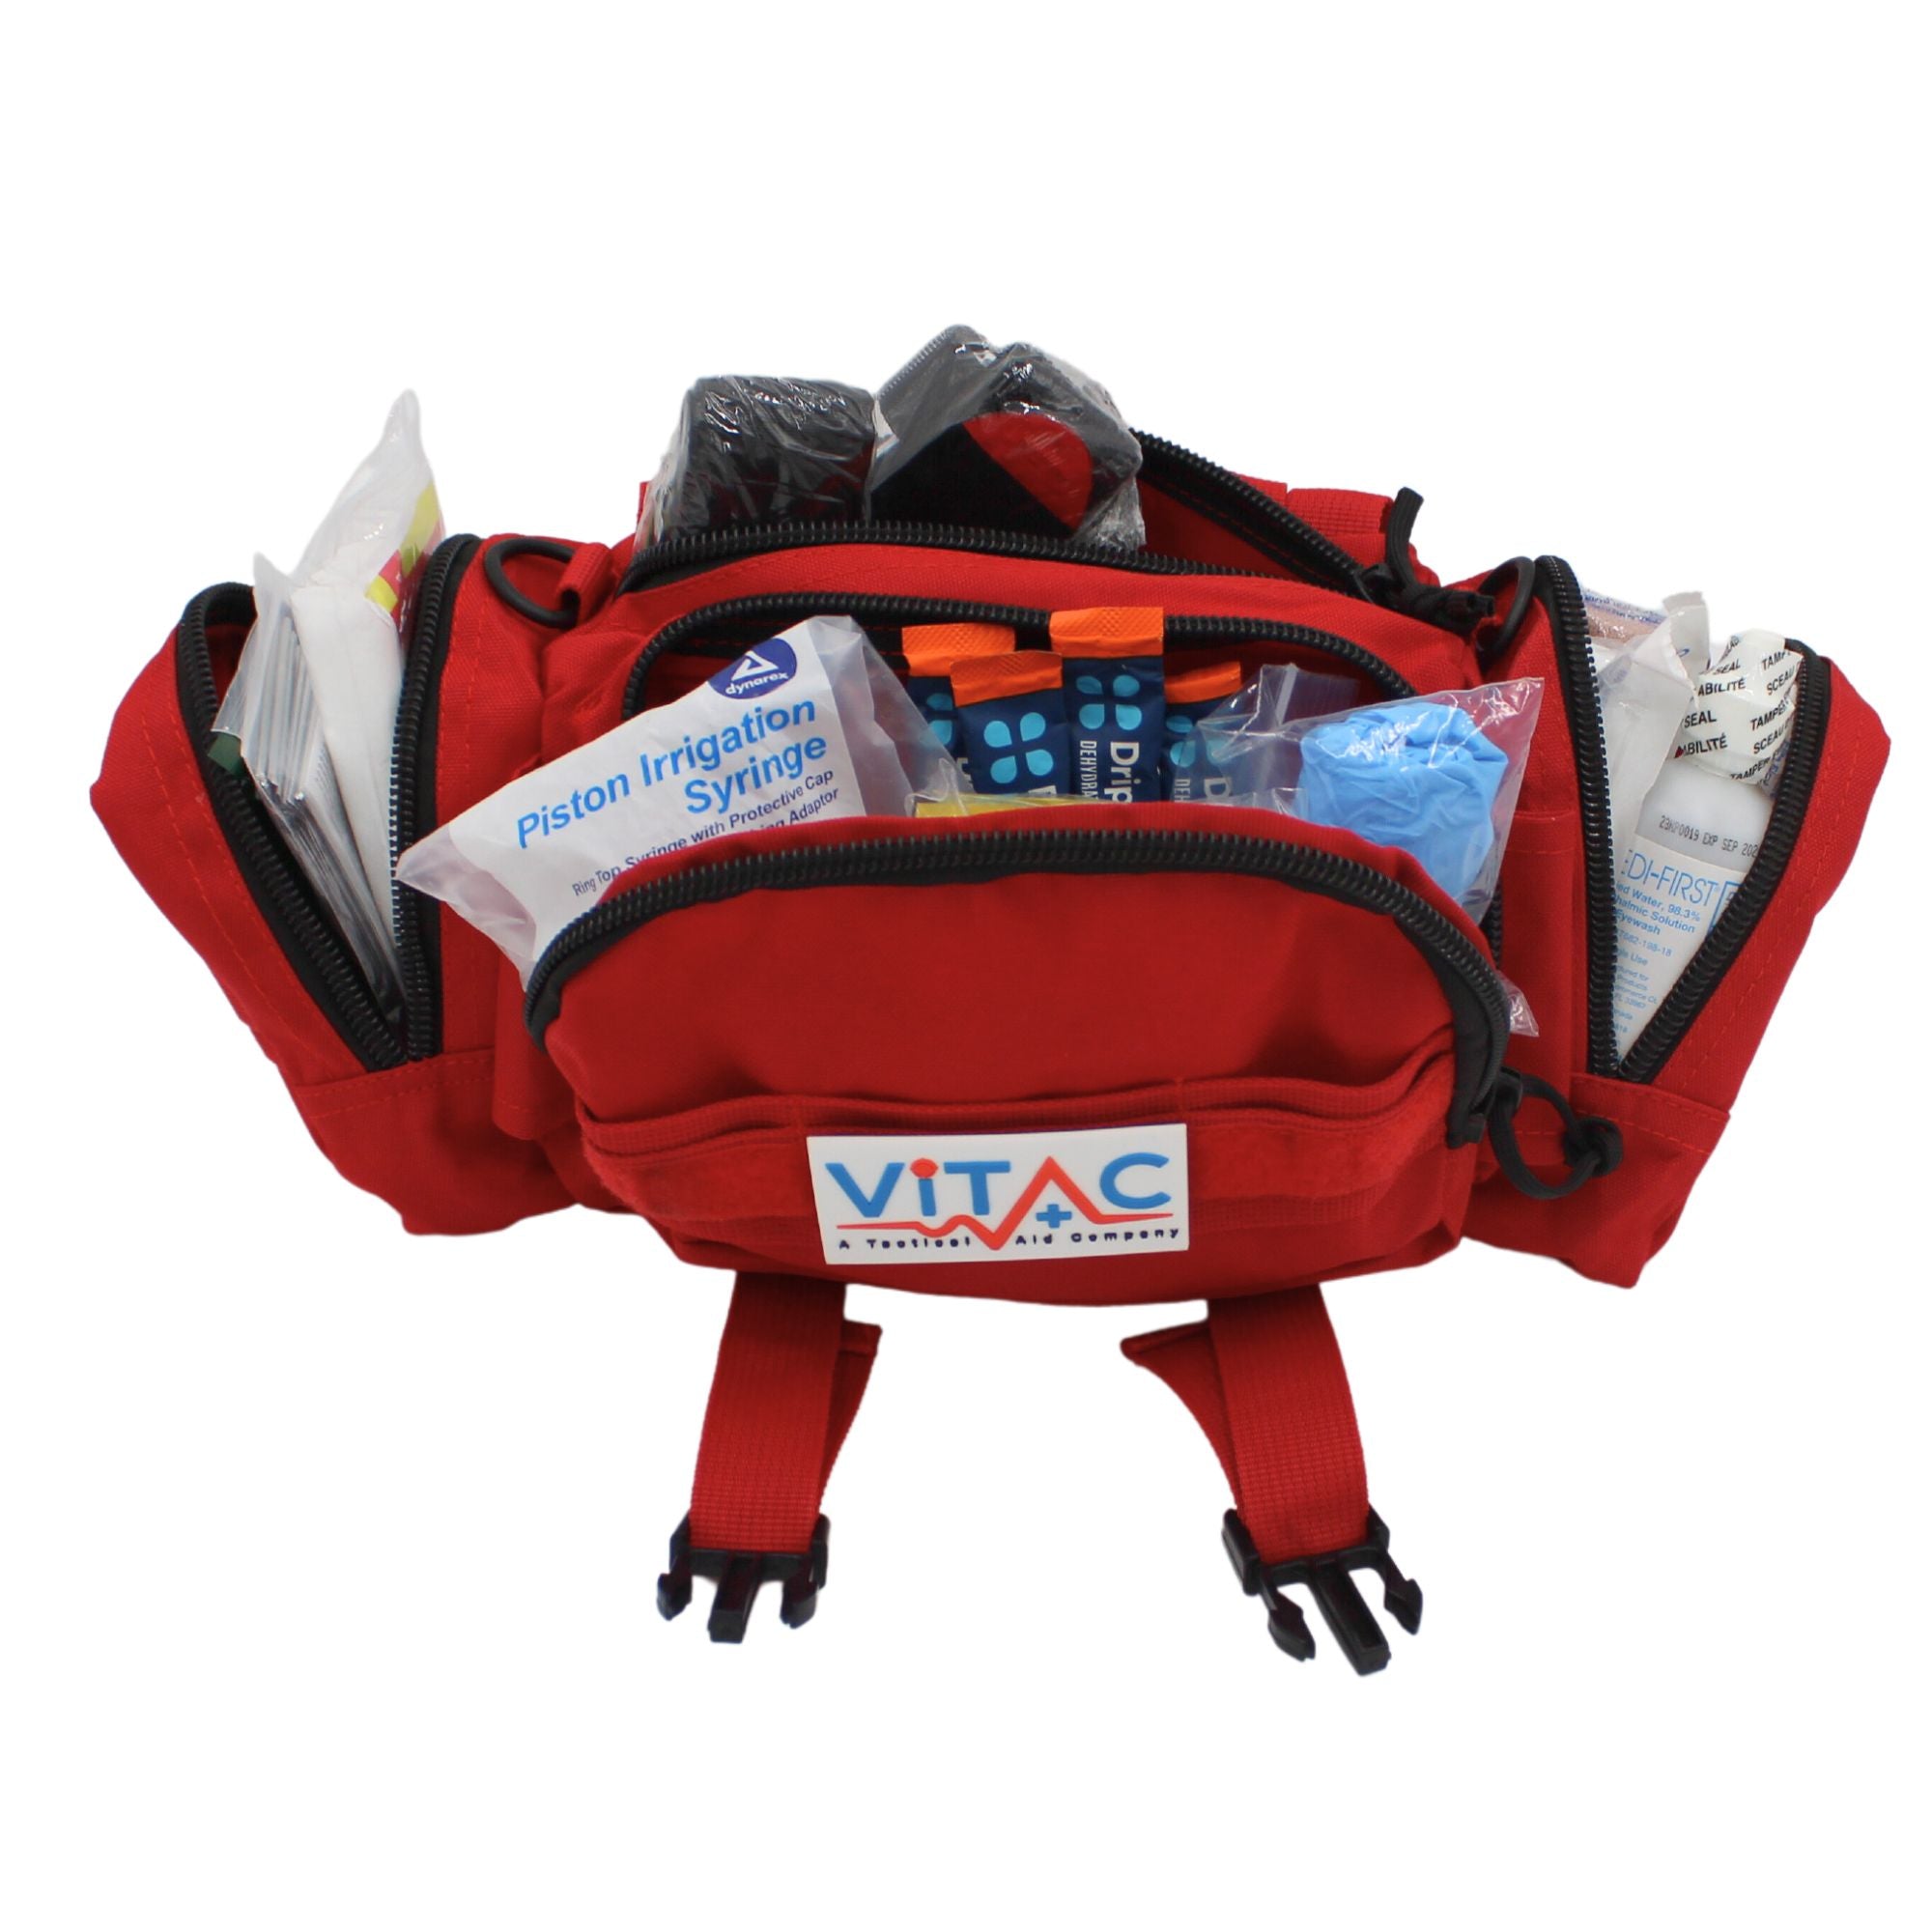 ViTAC Advanced Adventurer First Aid Kit, Red, Open Kit